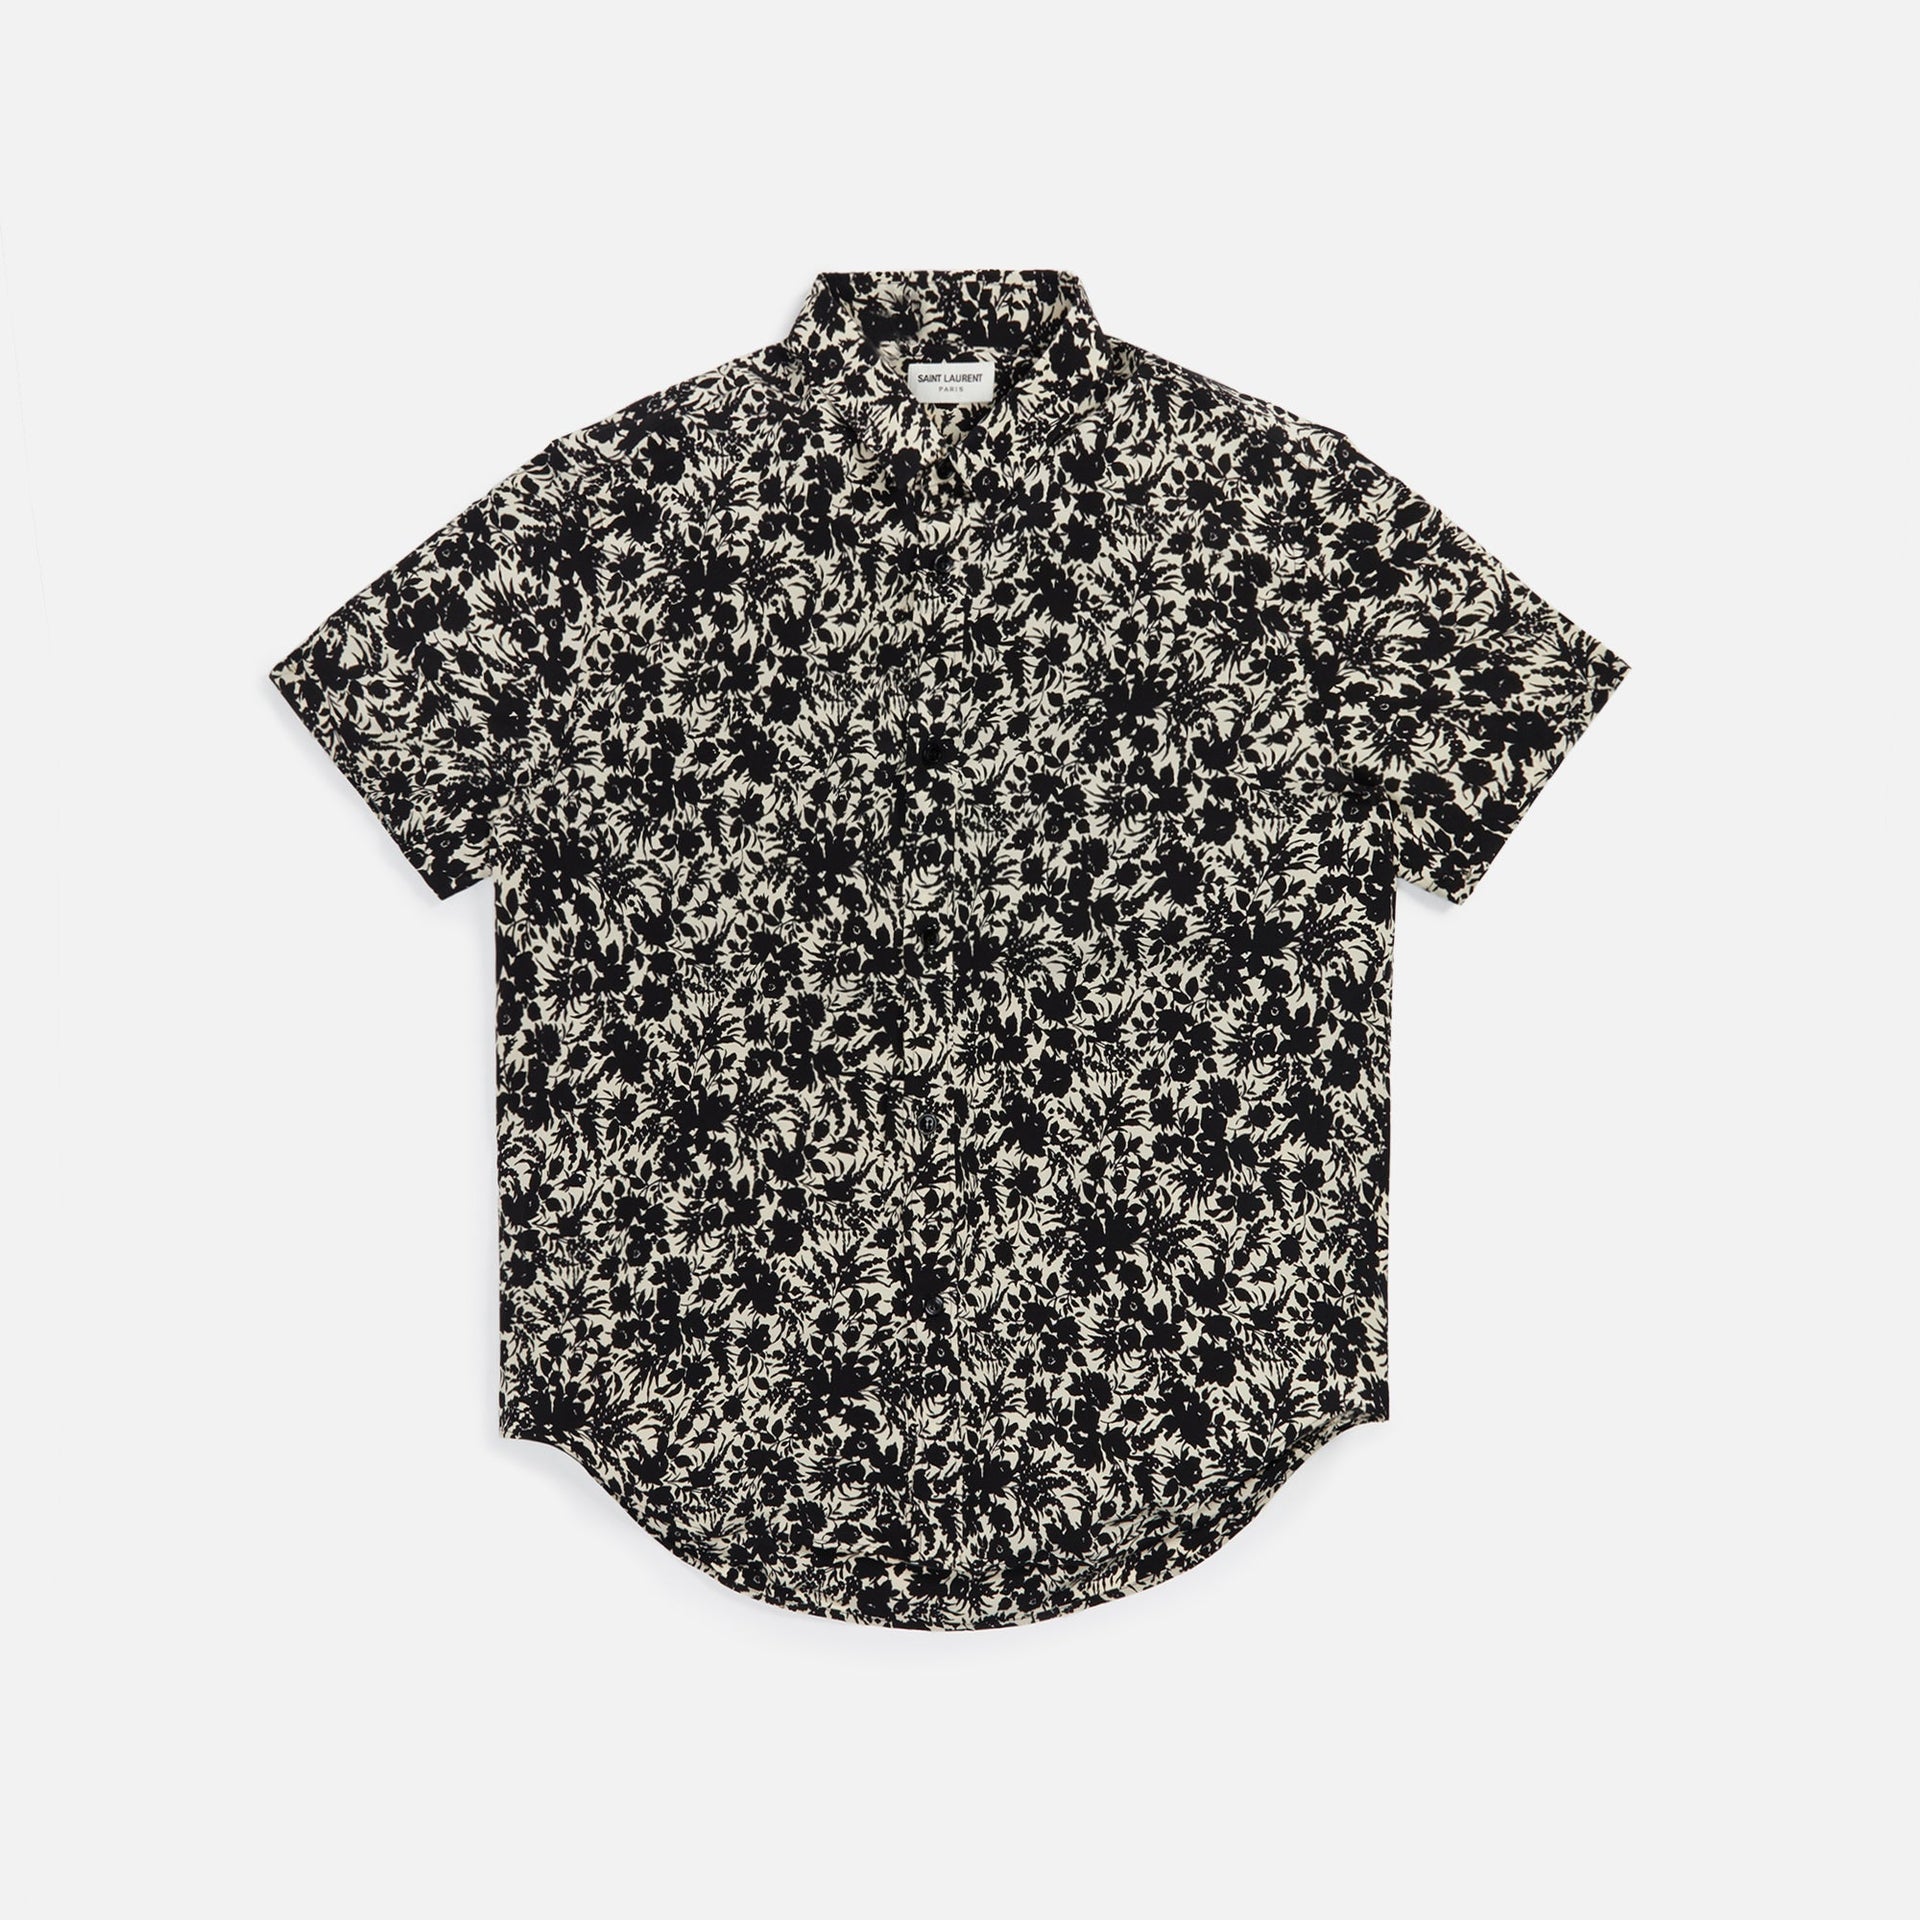 Saint Laurent floral Short Sleeved Silk Shirt - Black / White